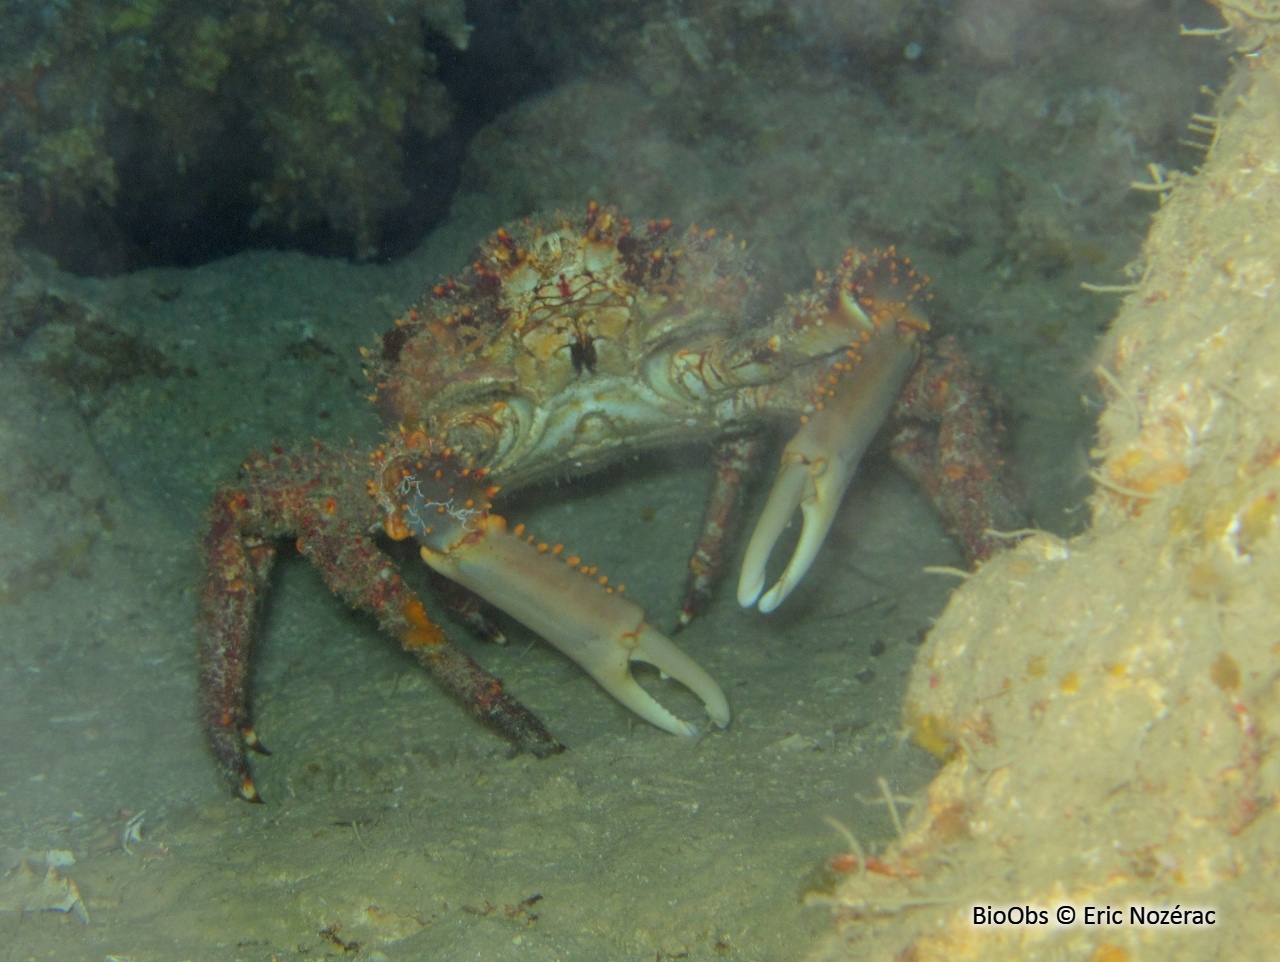 Araignée de mer verruqueuse - Maguimithrax spinosissimus - Eric Nozérac - BioObs